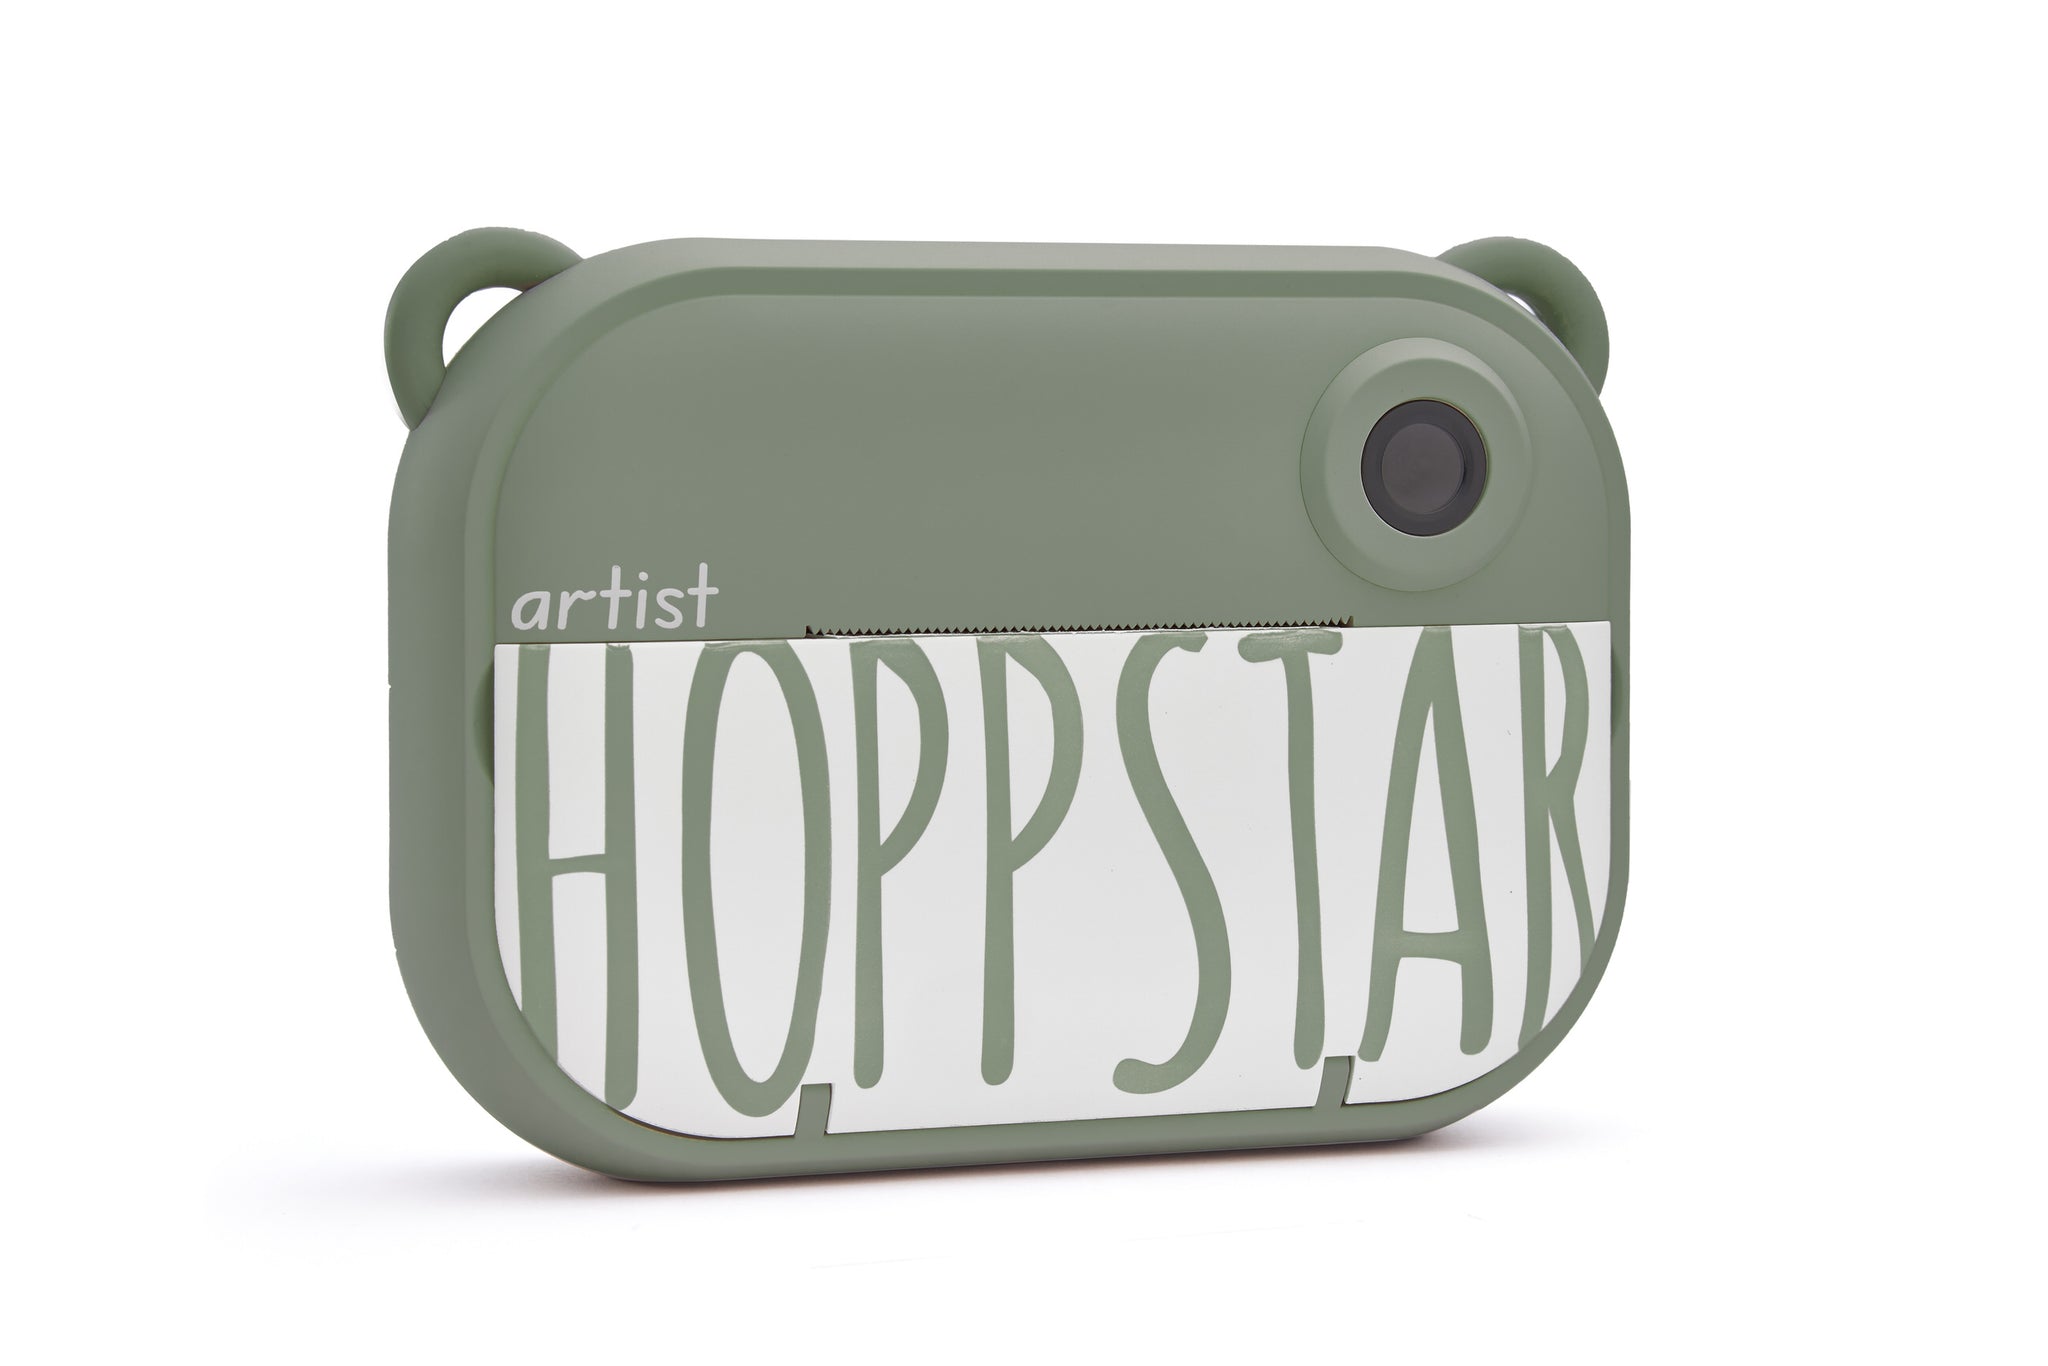 Hoppstar Artist: Grüne Polaroid-Kamera für Kinder ab 5 Jahren